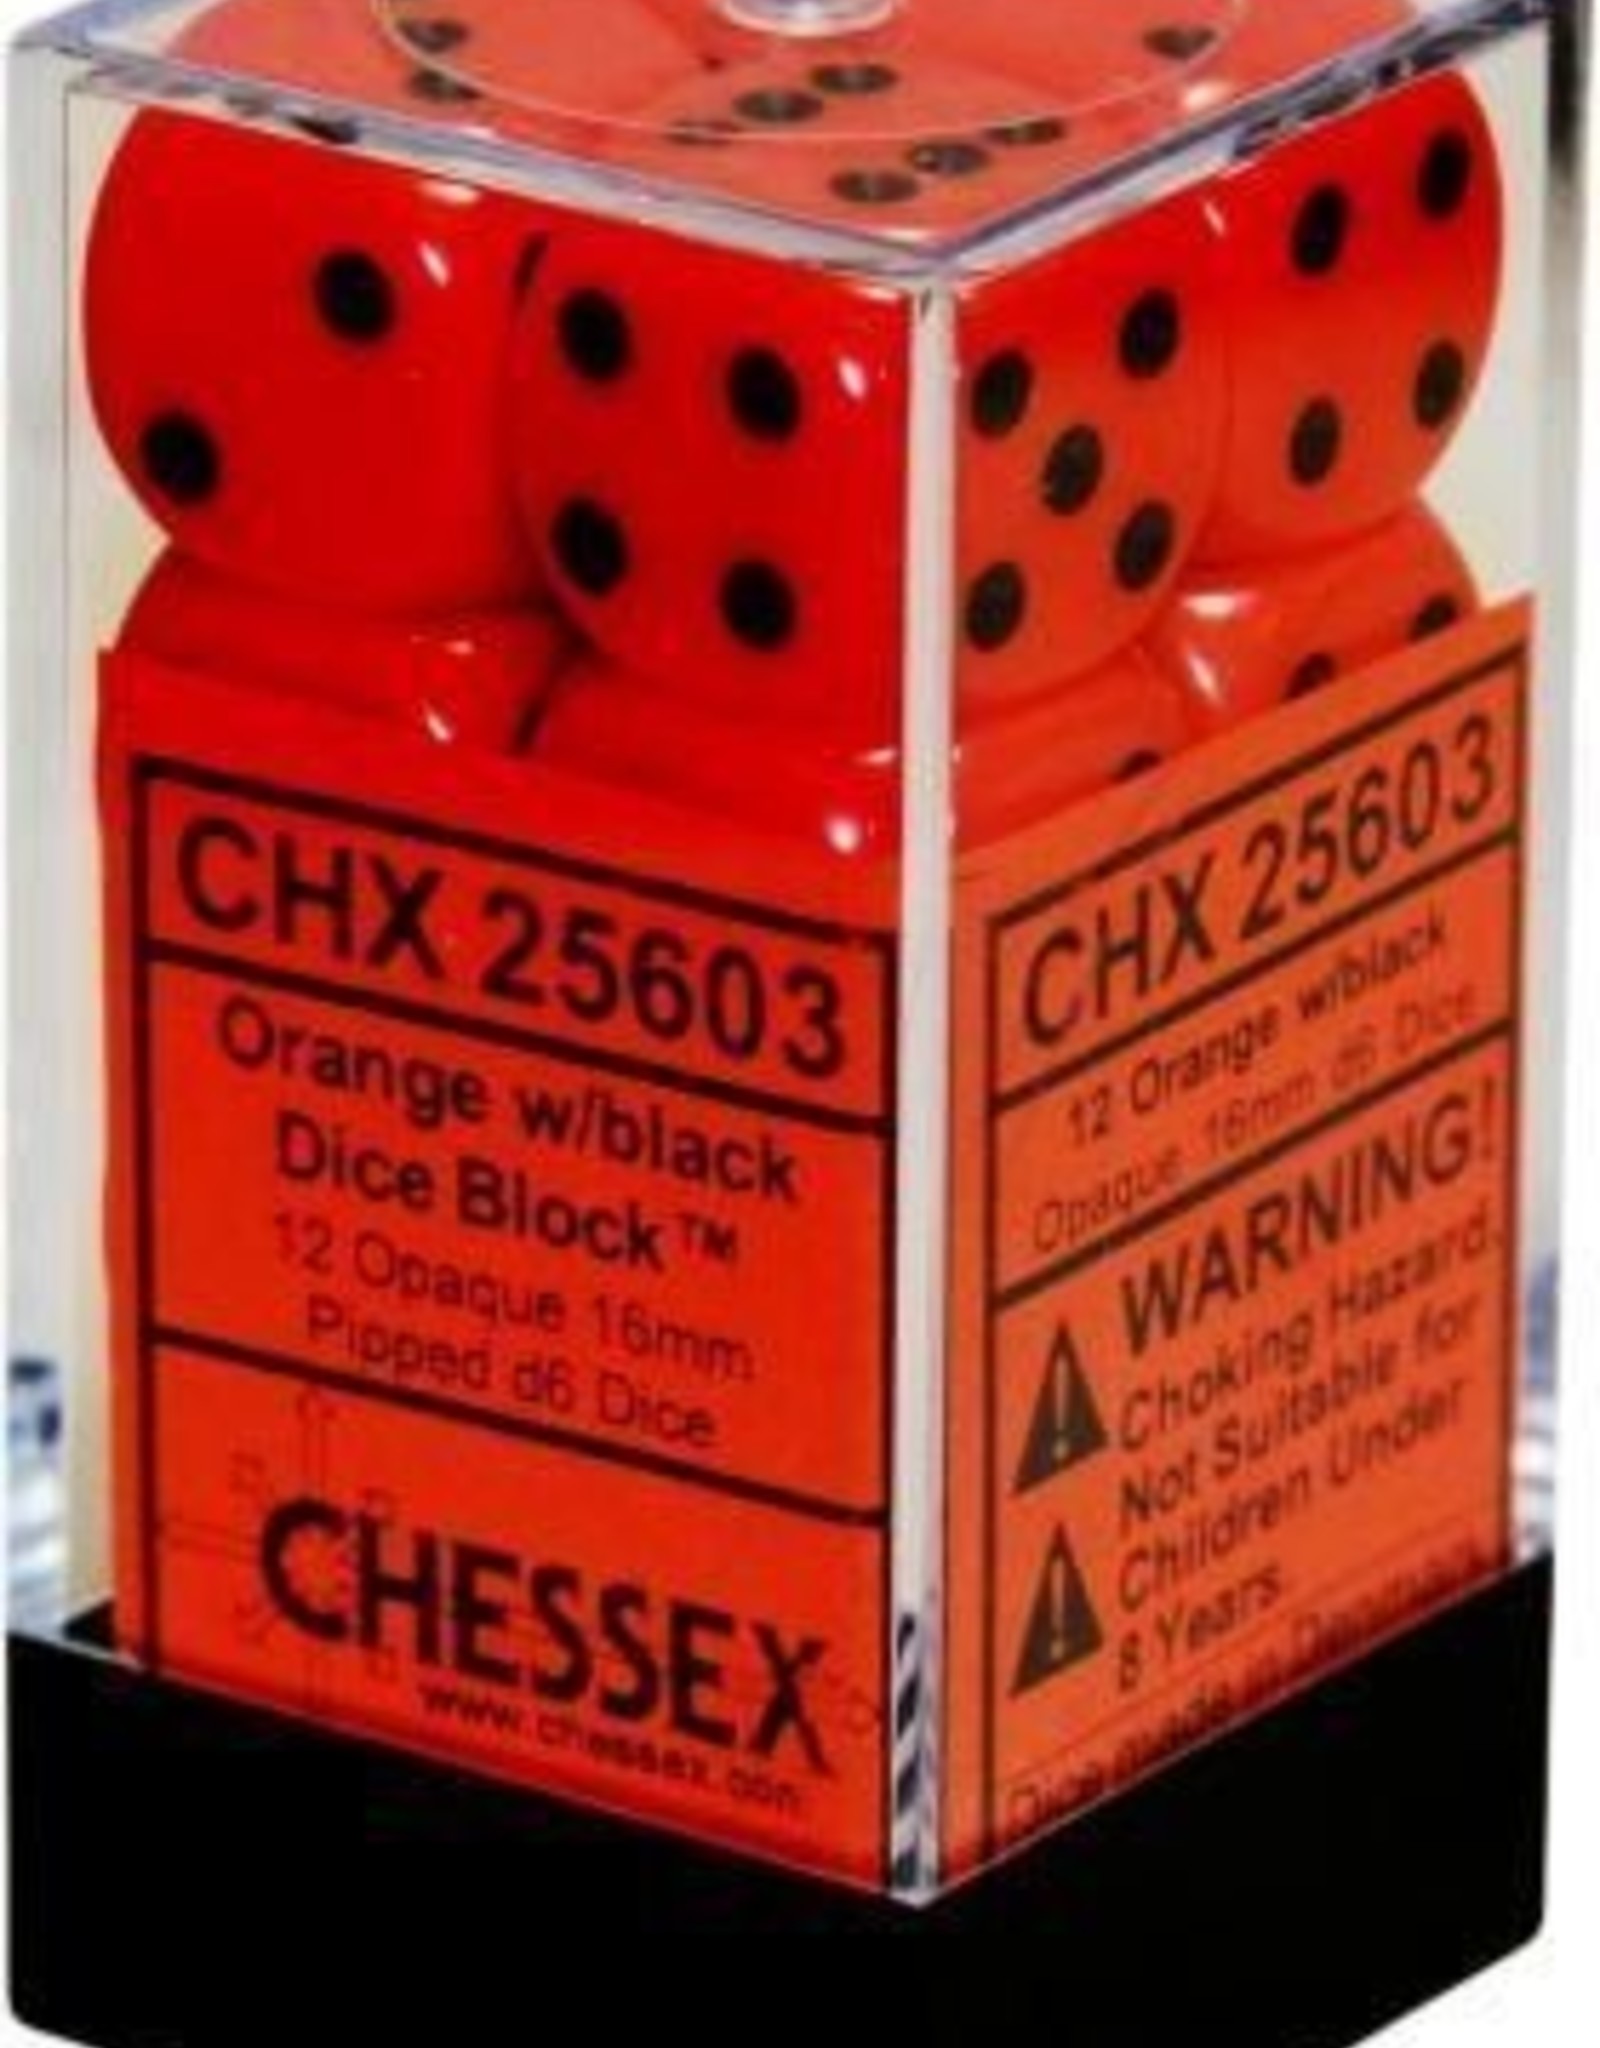 Chessex 16MM D6 Dice Set CHX25603 Opaque Orange/Black